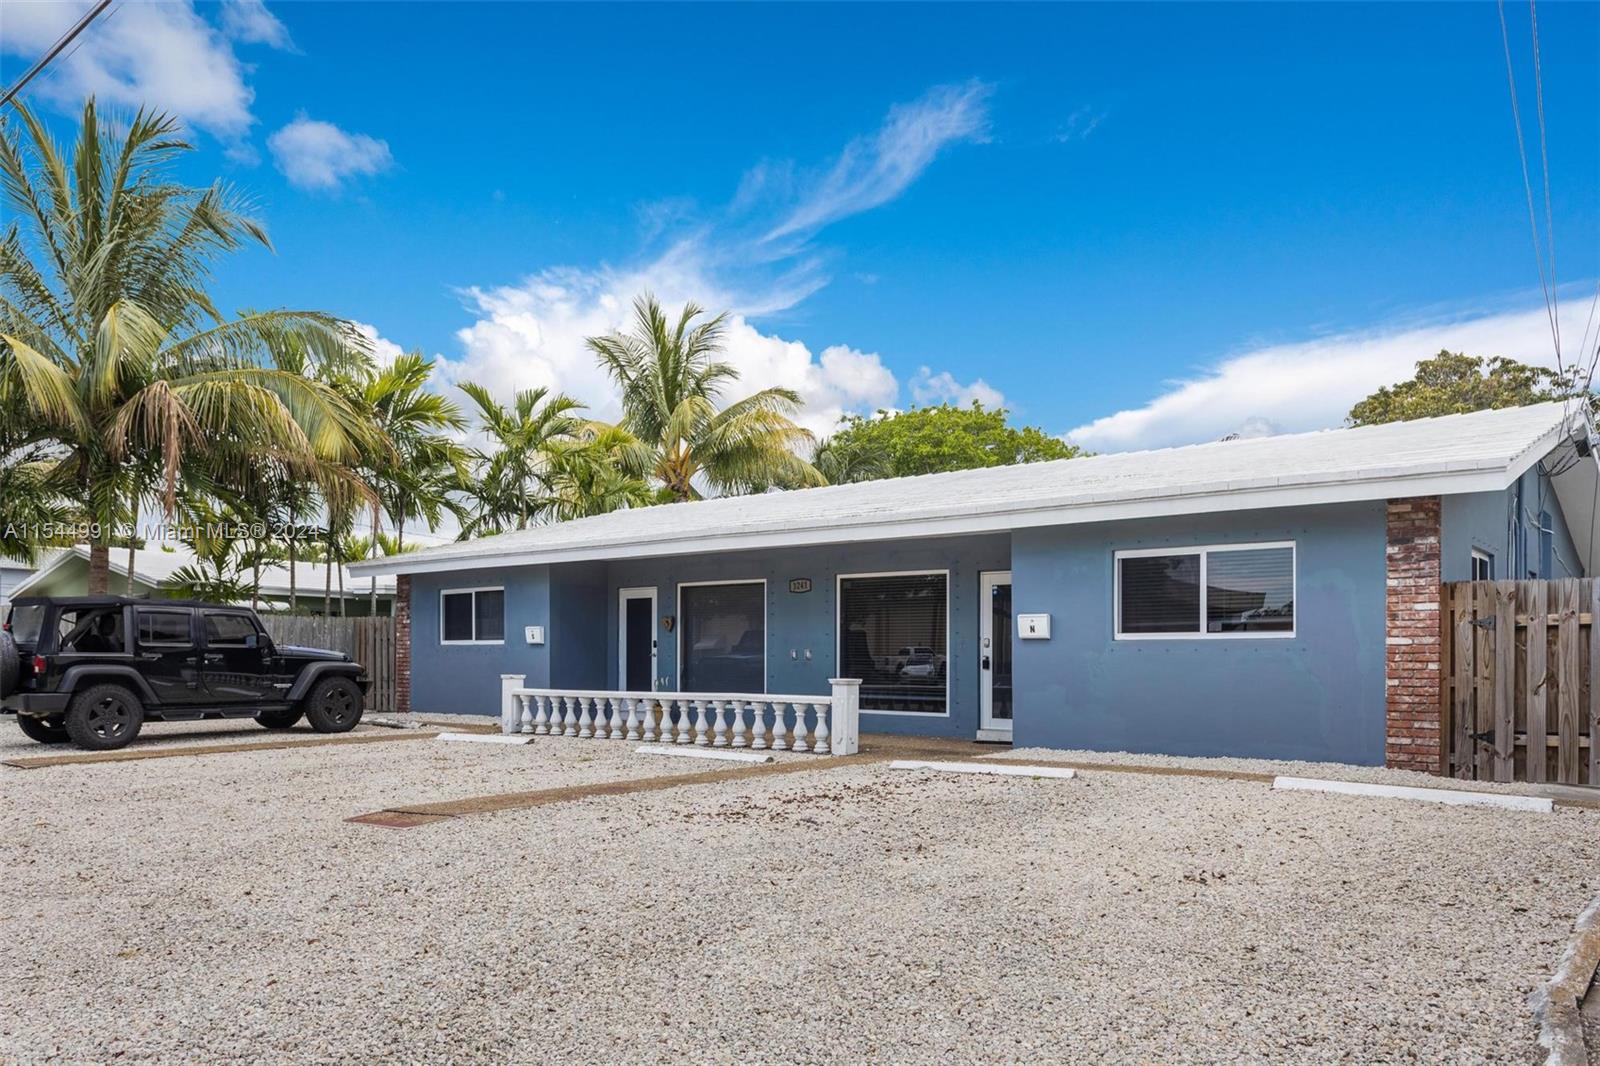 Rental Property at 3241 Ne 17th Ave, Oakland Park, Miami-Dade County, Florida -  - $930,000 MO.